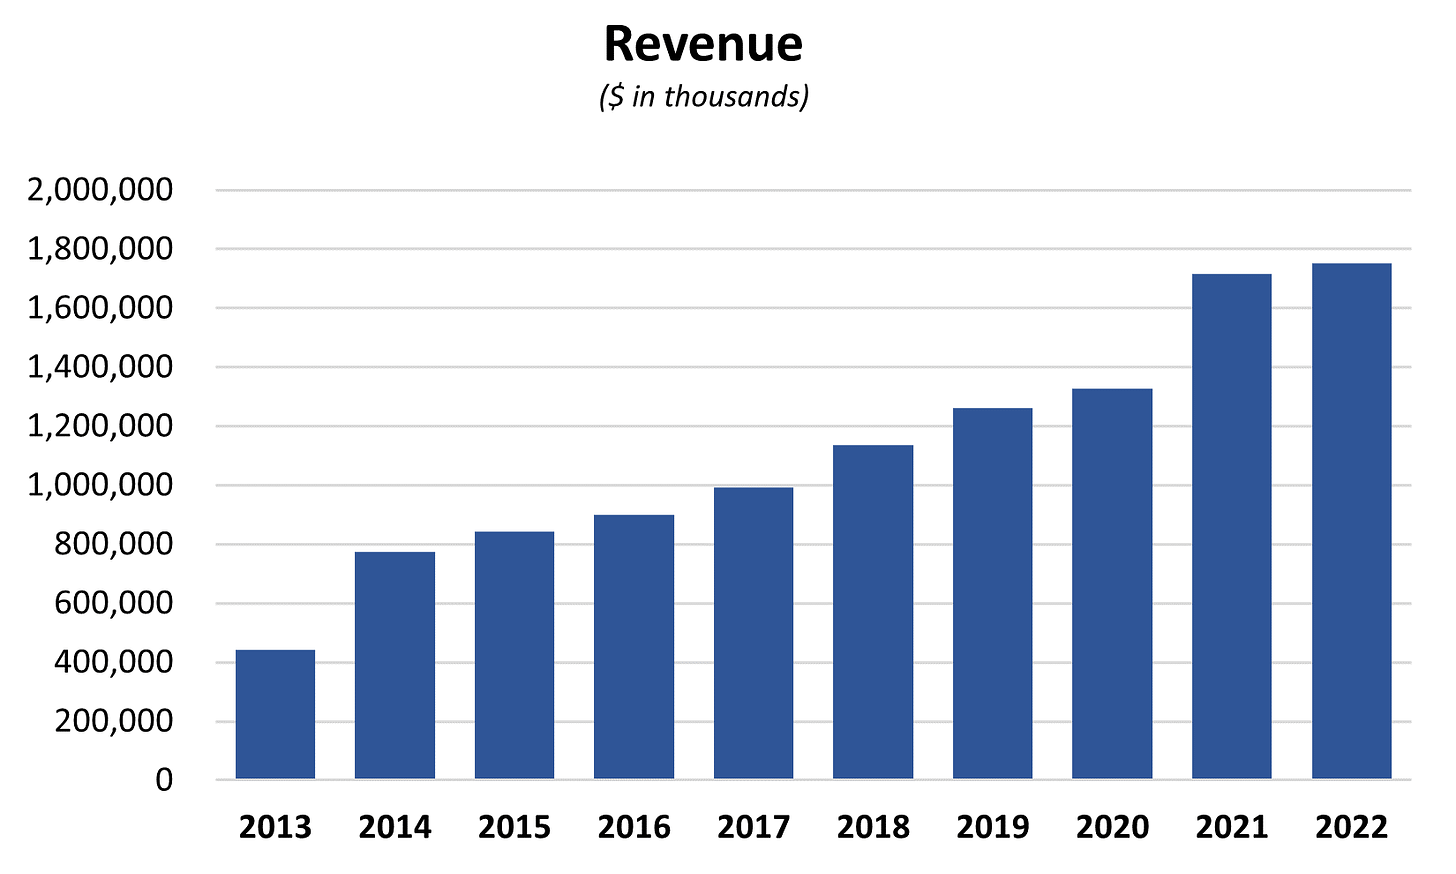 Sonos revenue over the last decade